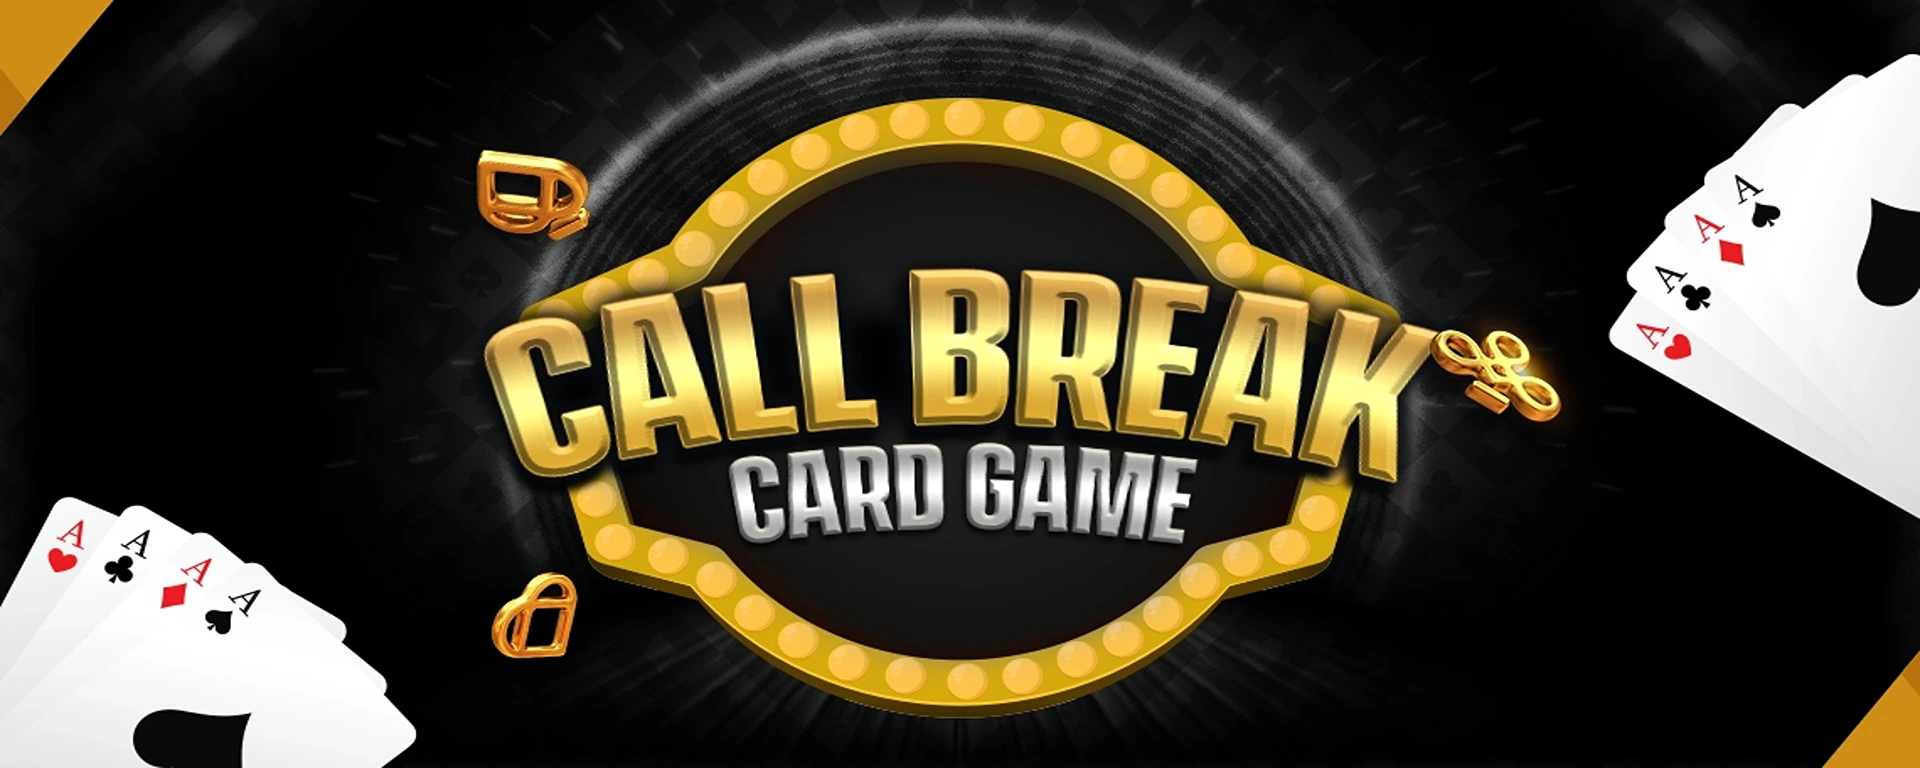 Call Break Card Game Multiplayer Callbreak